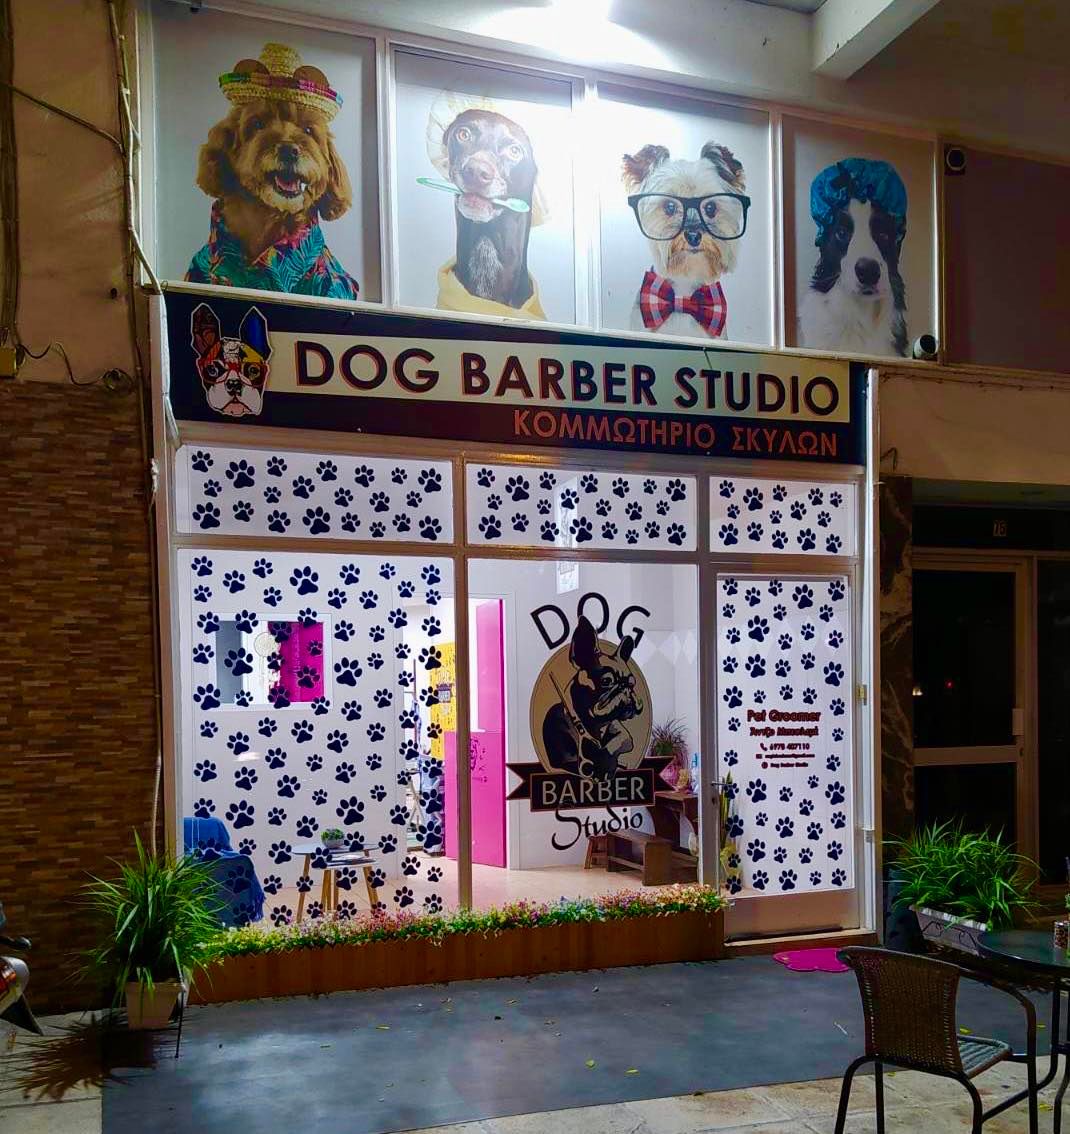 Dog Barber Studio,το αγαπημένο μέρος περιποίησης των τετράποδων φίλων μας